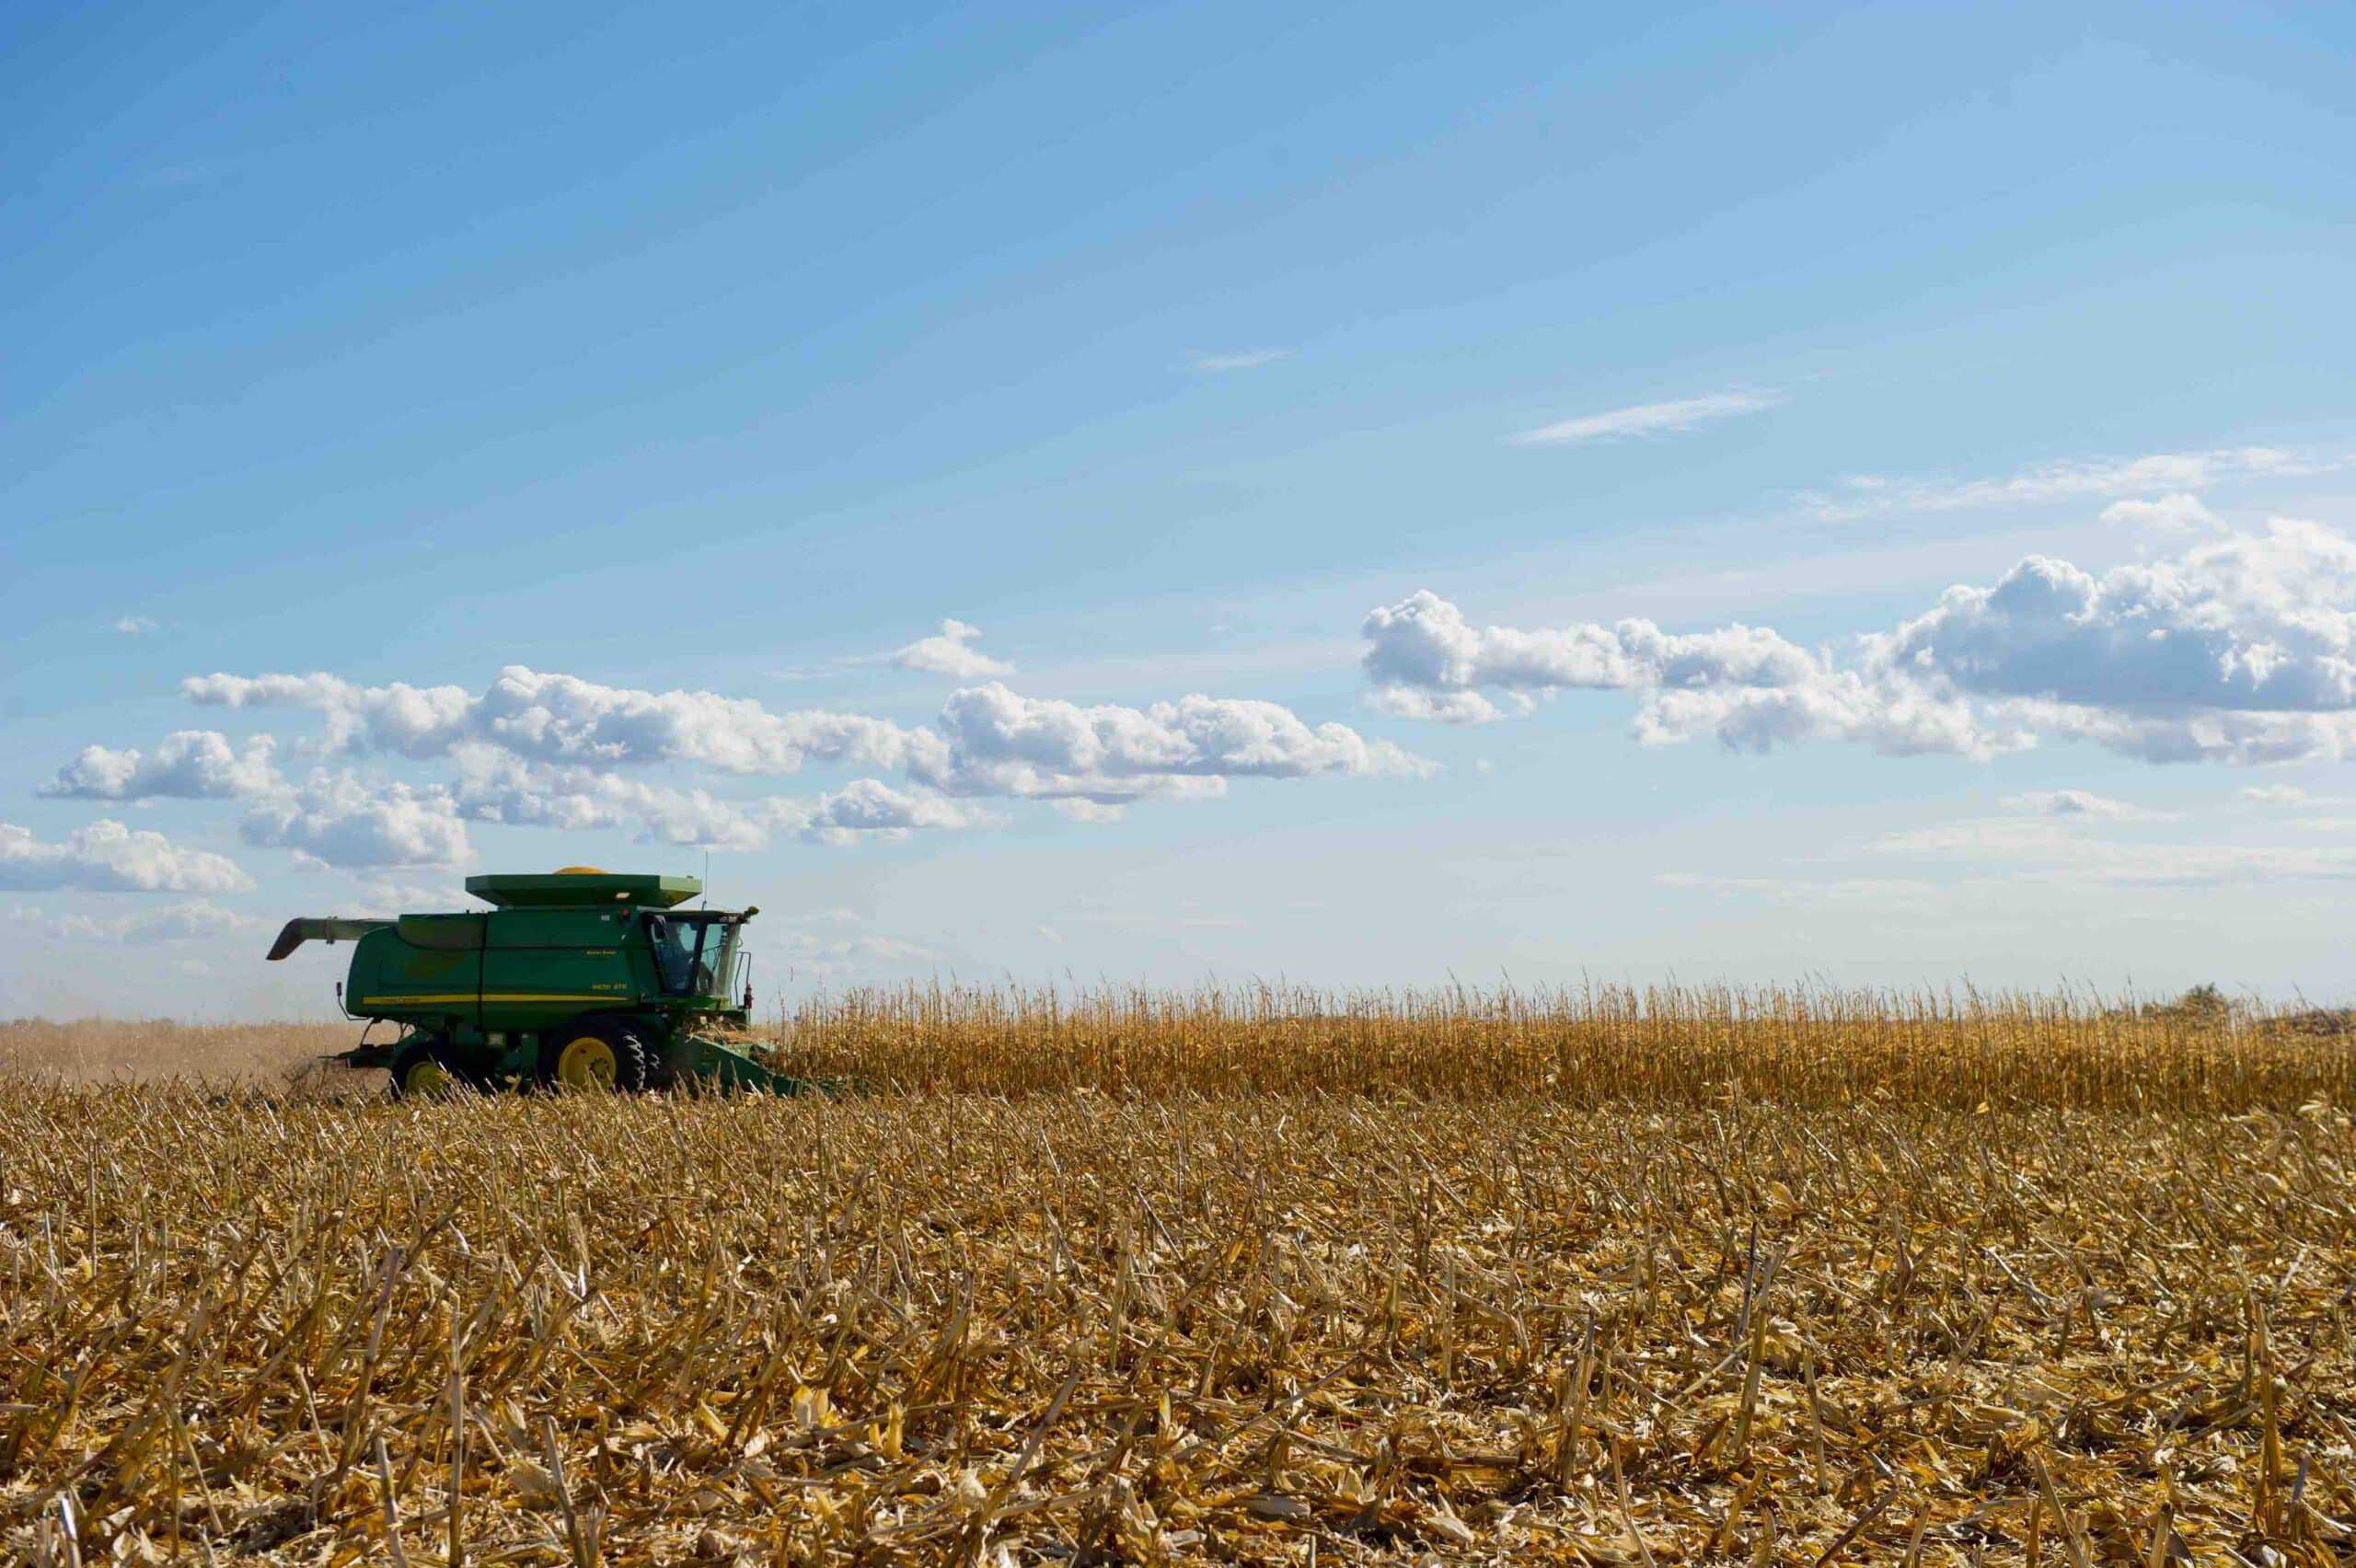 A green combine harvesting corn in South Dakota.